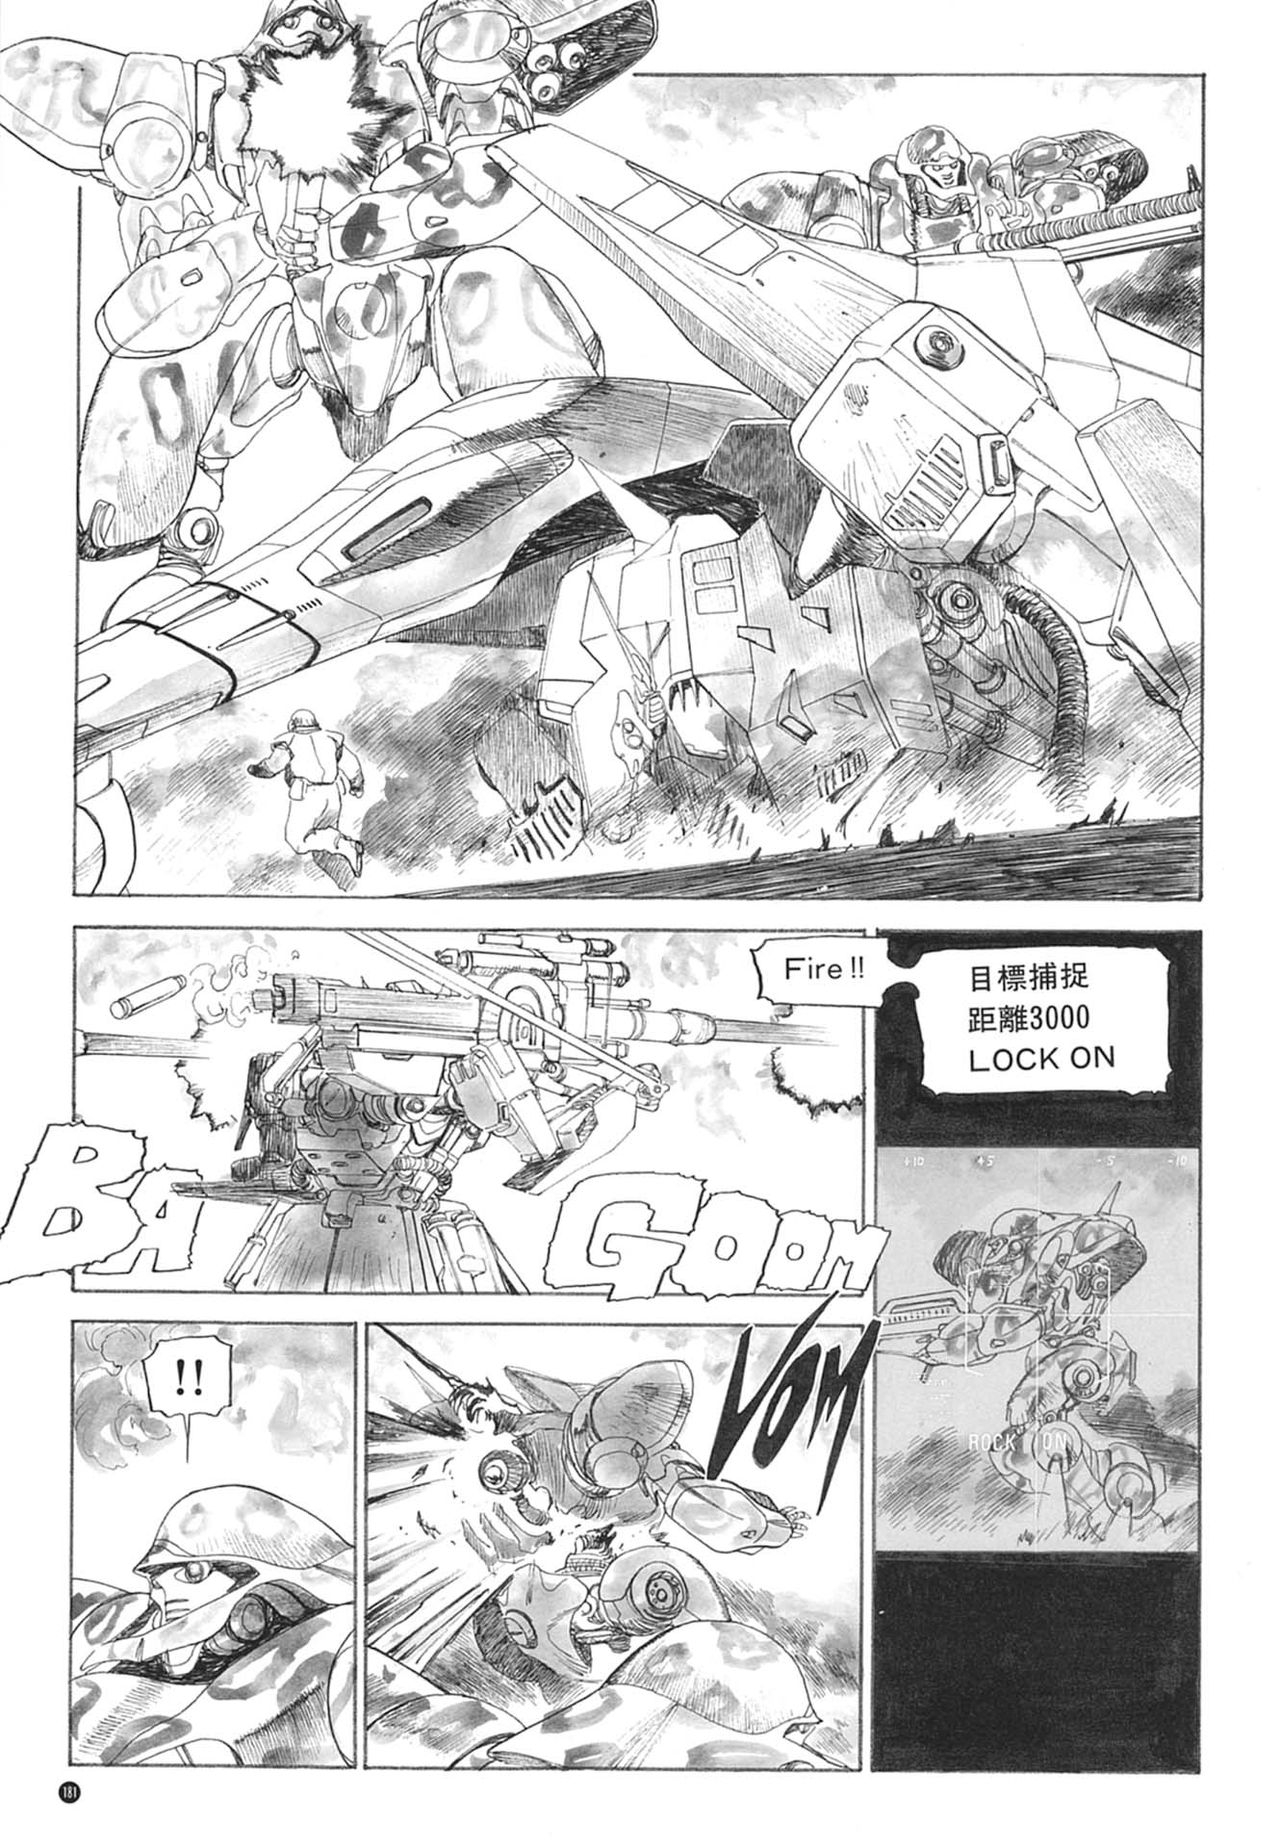 [Kazuhisa Kondo] Kazuhisa Kondo 2D & 3D Works - Go Ahead - From Mobile Suit Gundam to Original Mechanism 180